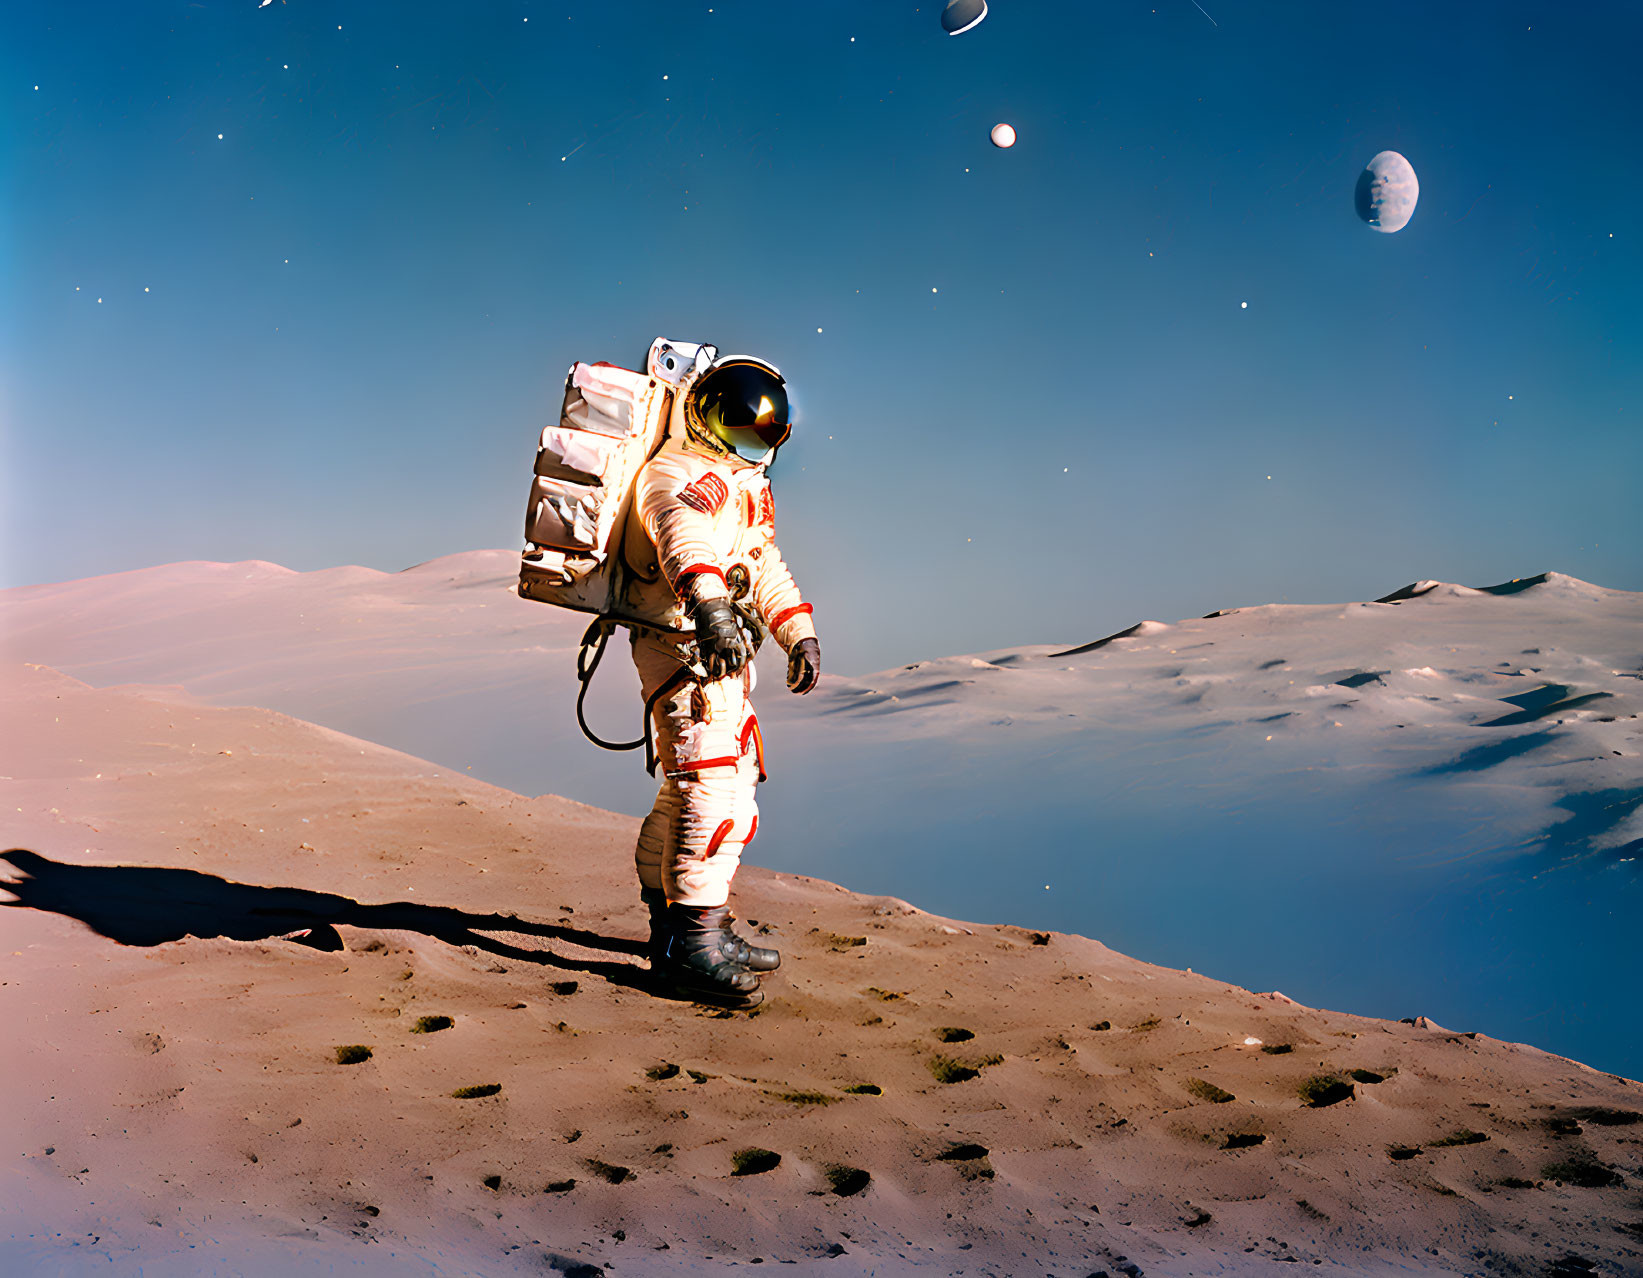 Astronaut in white spacesuit explores barren hilly landscape